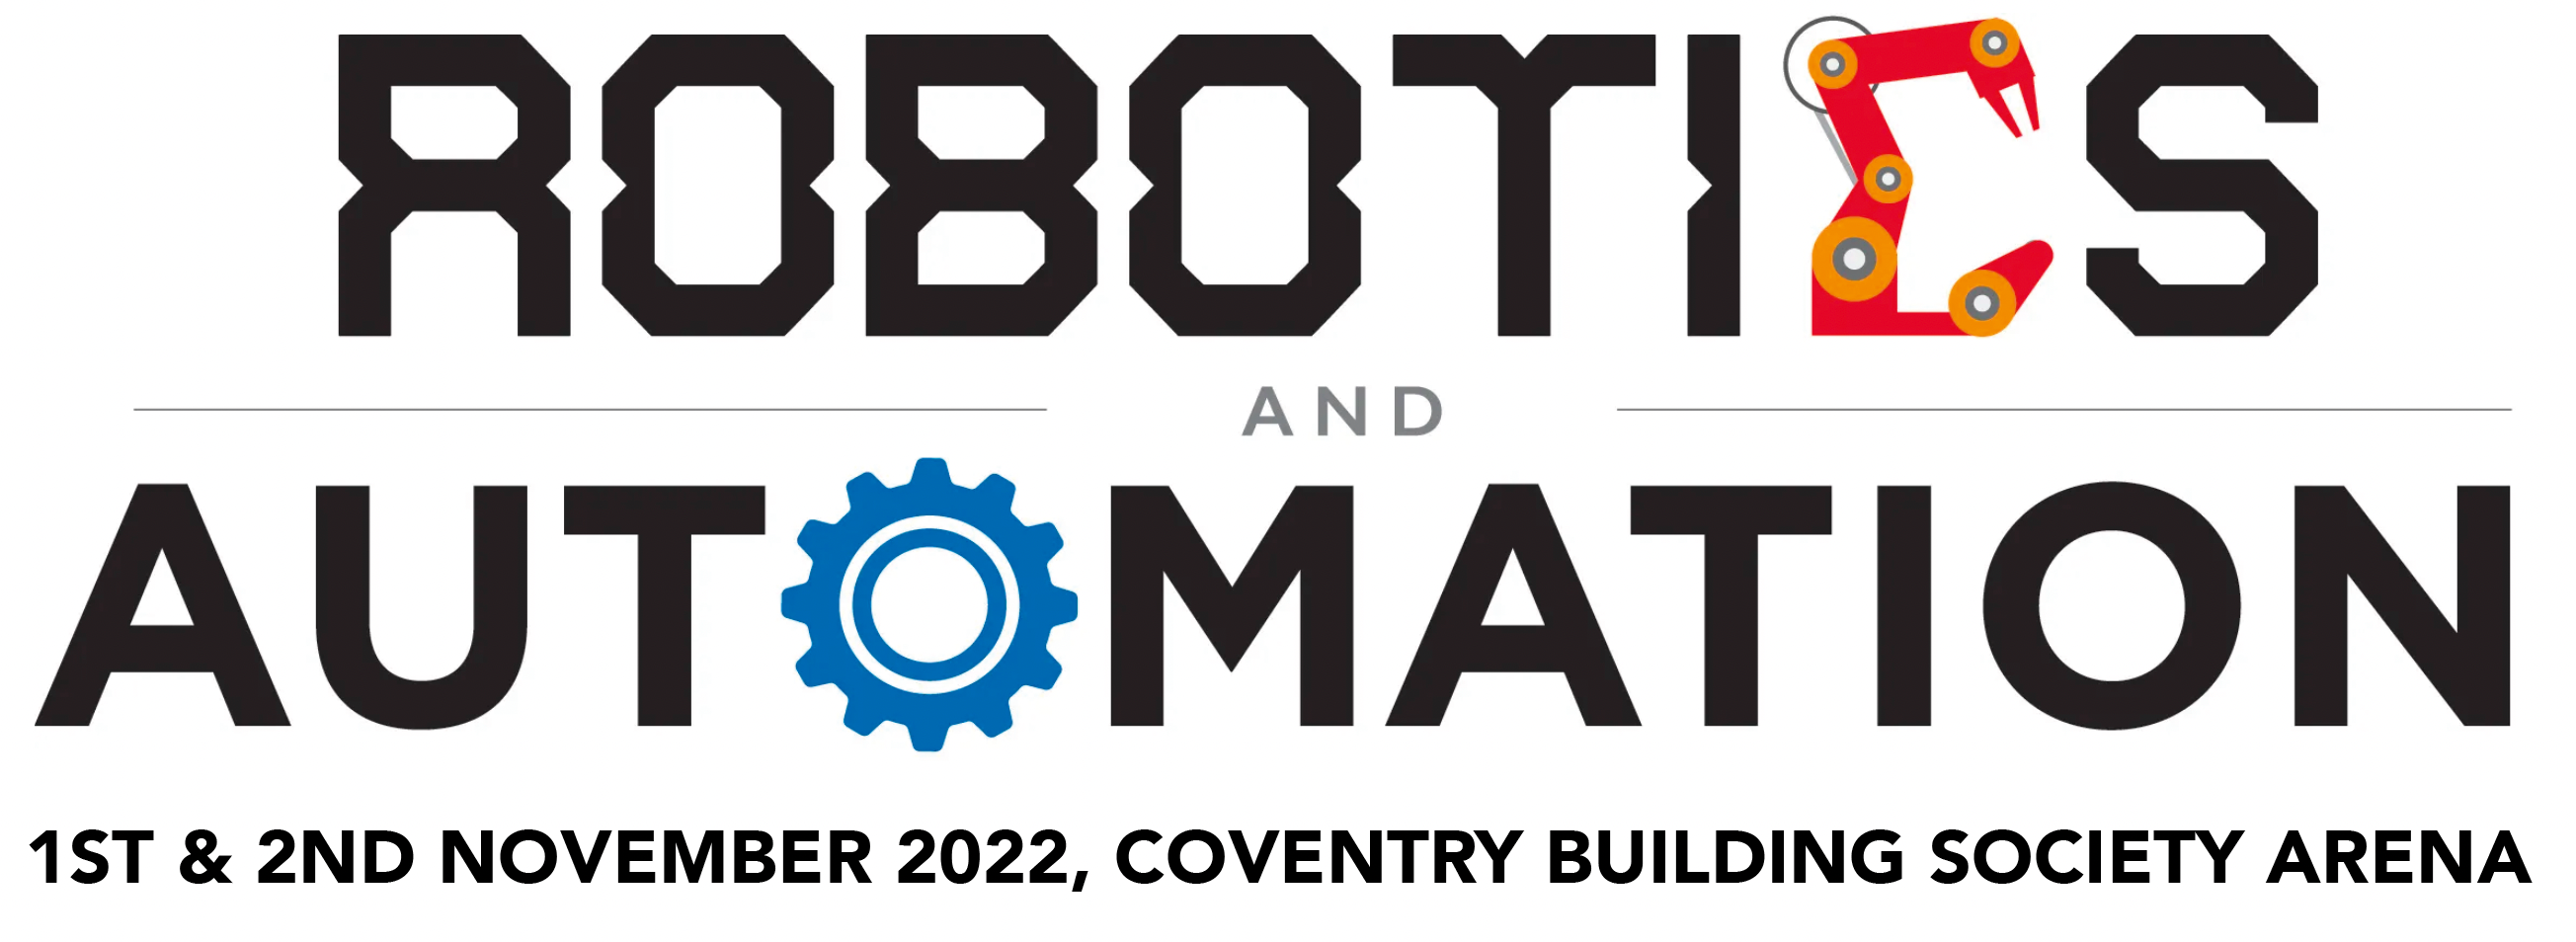 robotics and automation logo